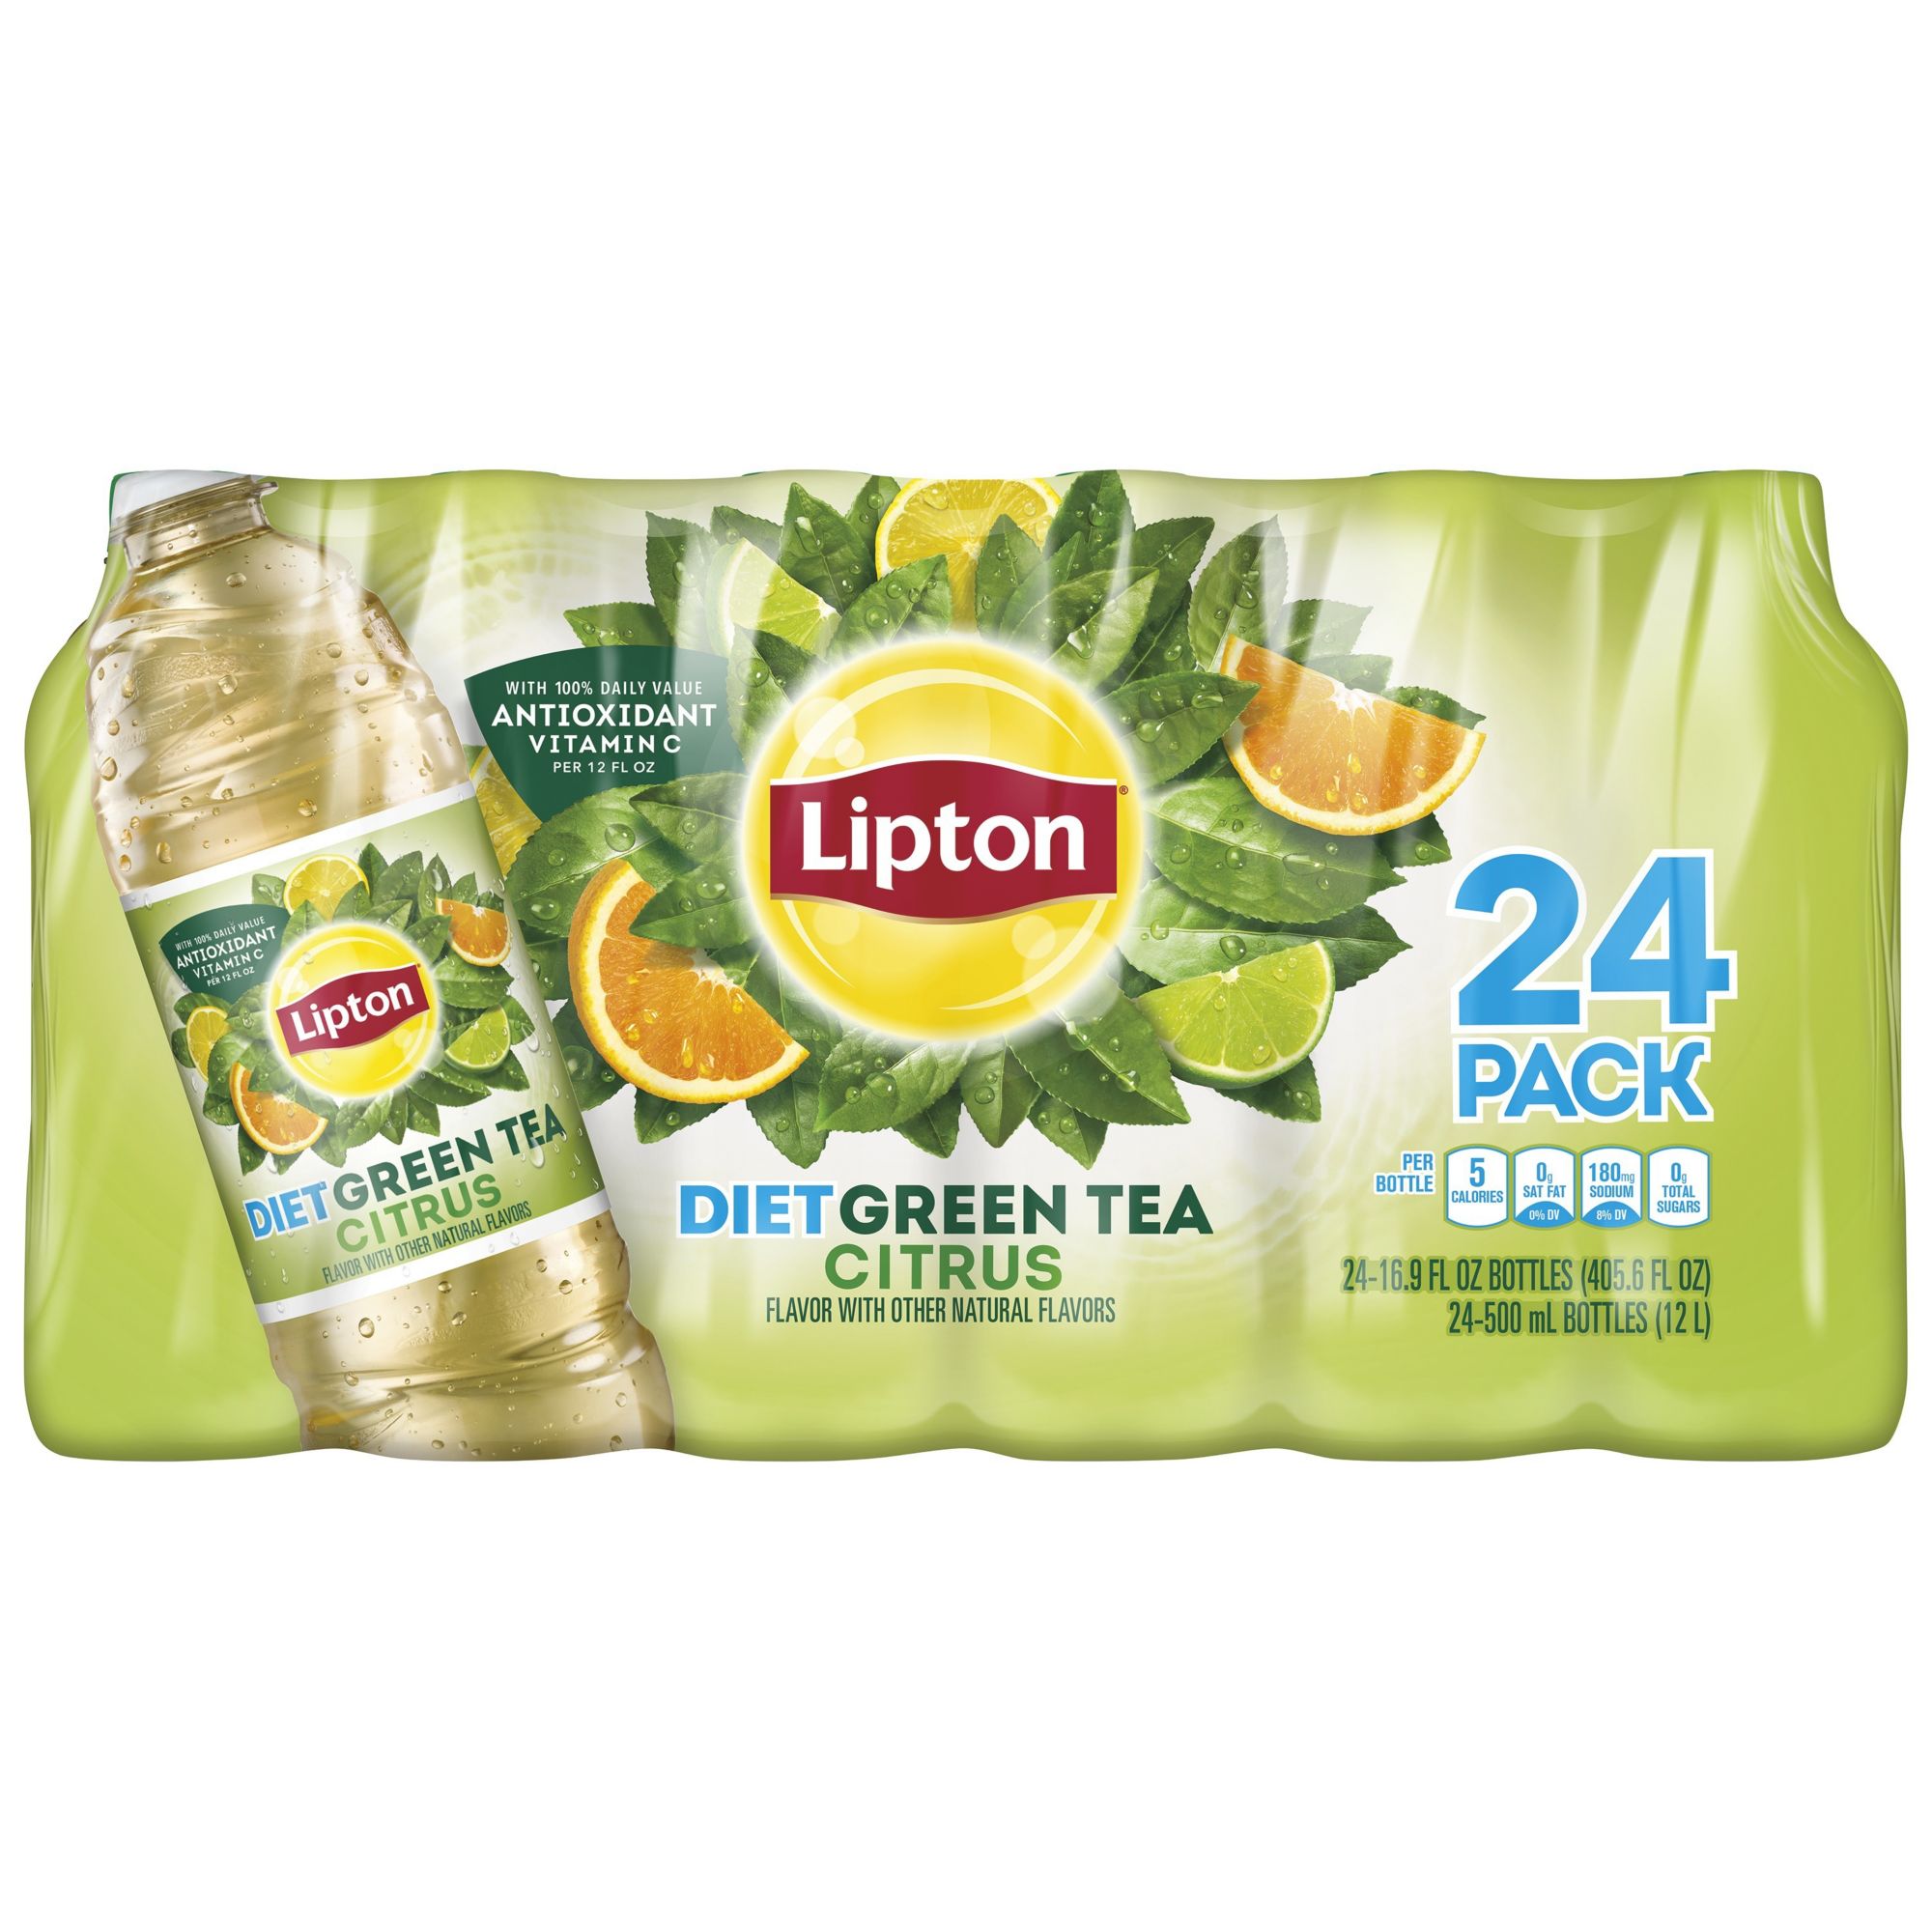 Lipton Green Tea, Diet, Citrus Flavor - 12 pack, 16.9 fl oz bottles